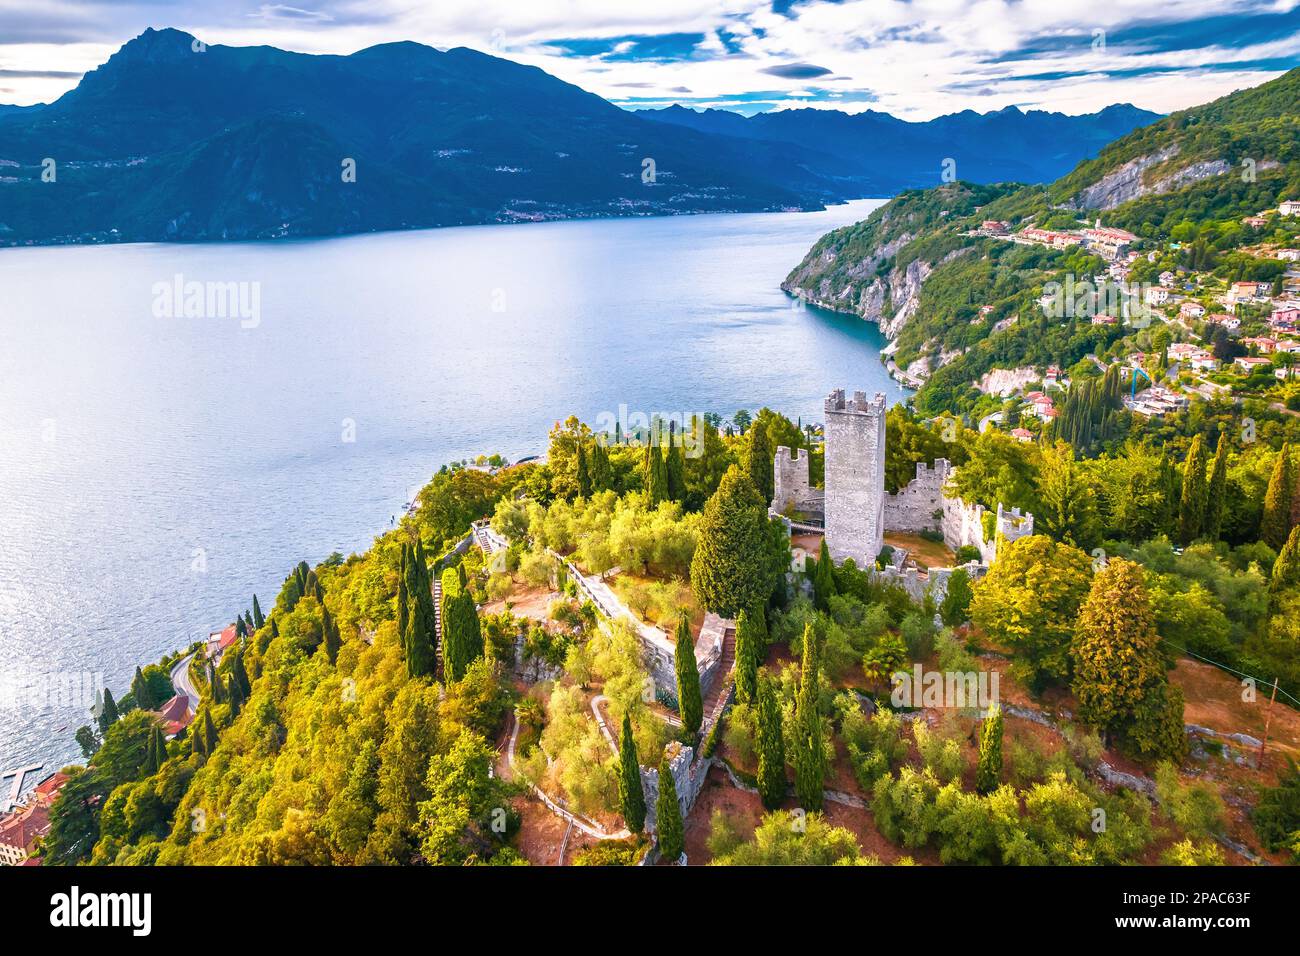 Castello di Vezio tower and Como lake aerial view, Lombardy region of Italy Stock Photo